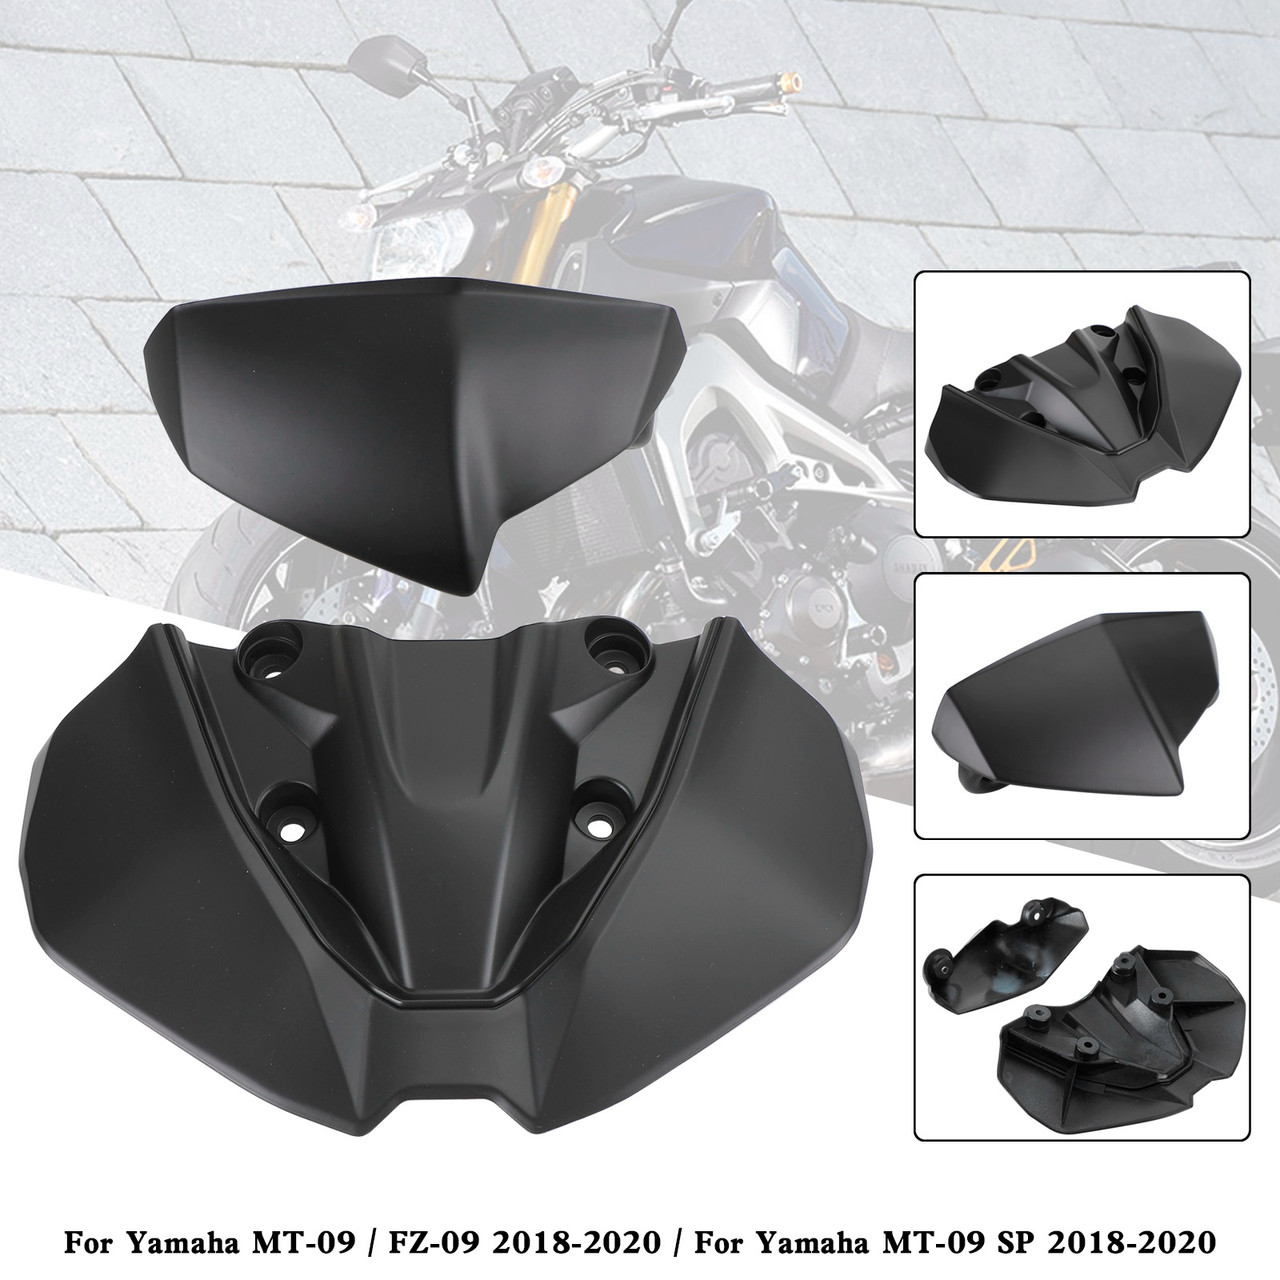 Headlight Fairing Windshield Cover For Yamaha MT-09 FZ09 MT-09 SP 2018-2020 MBLK